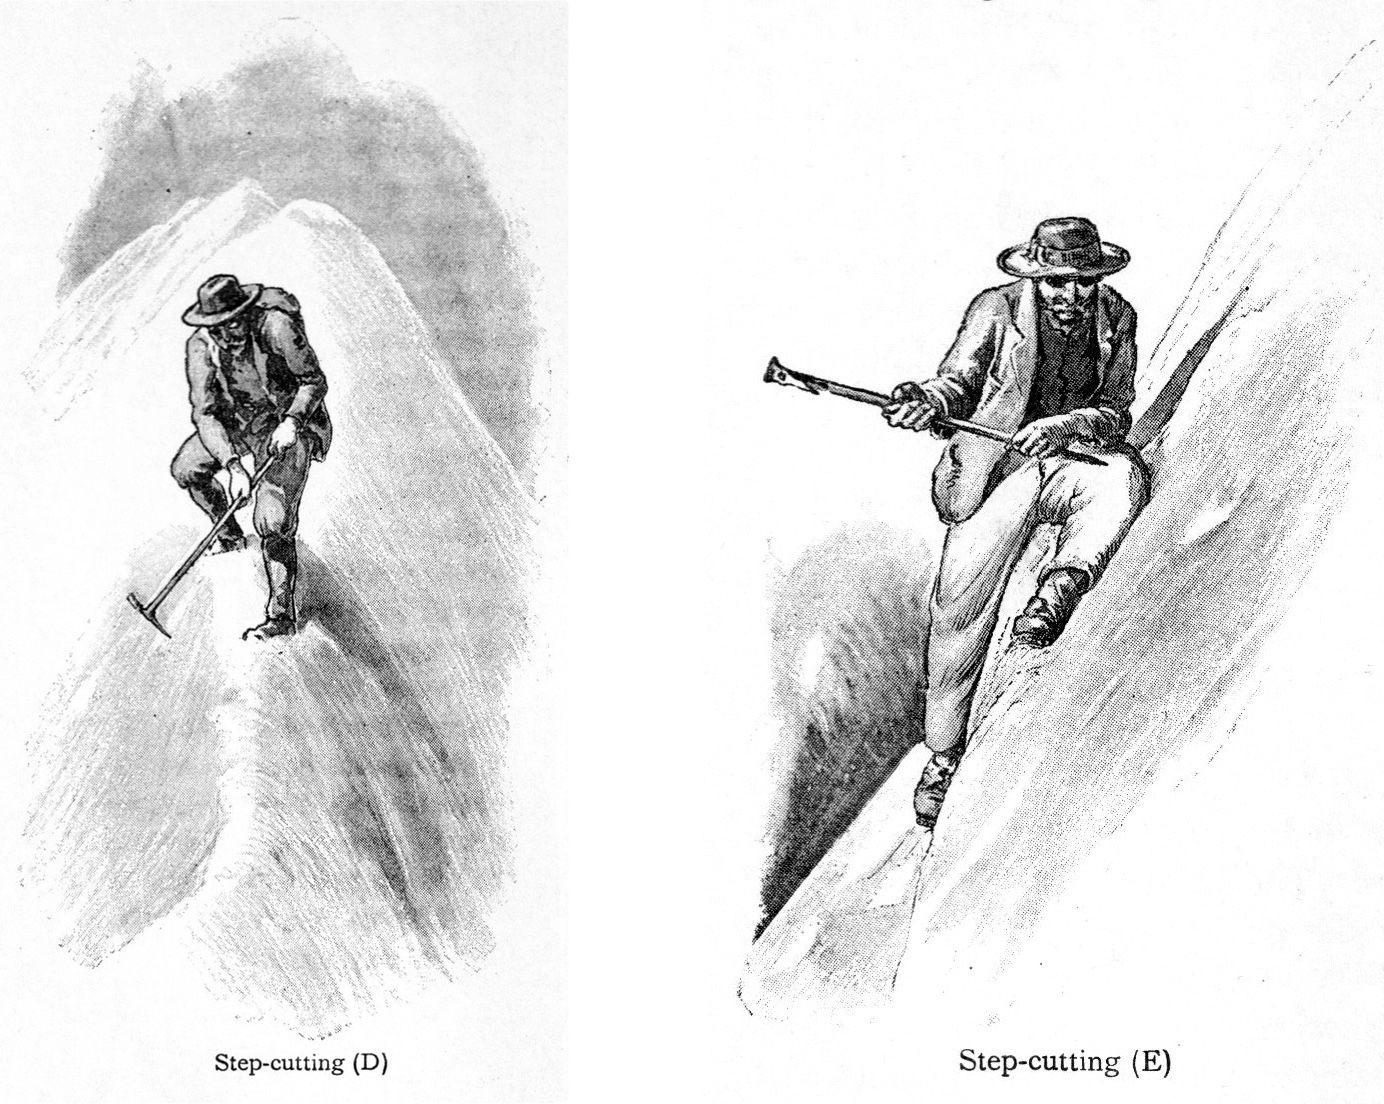 Pilgrim's Progress: a century of development in climbing equipment